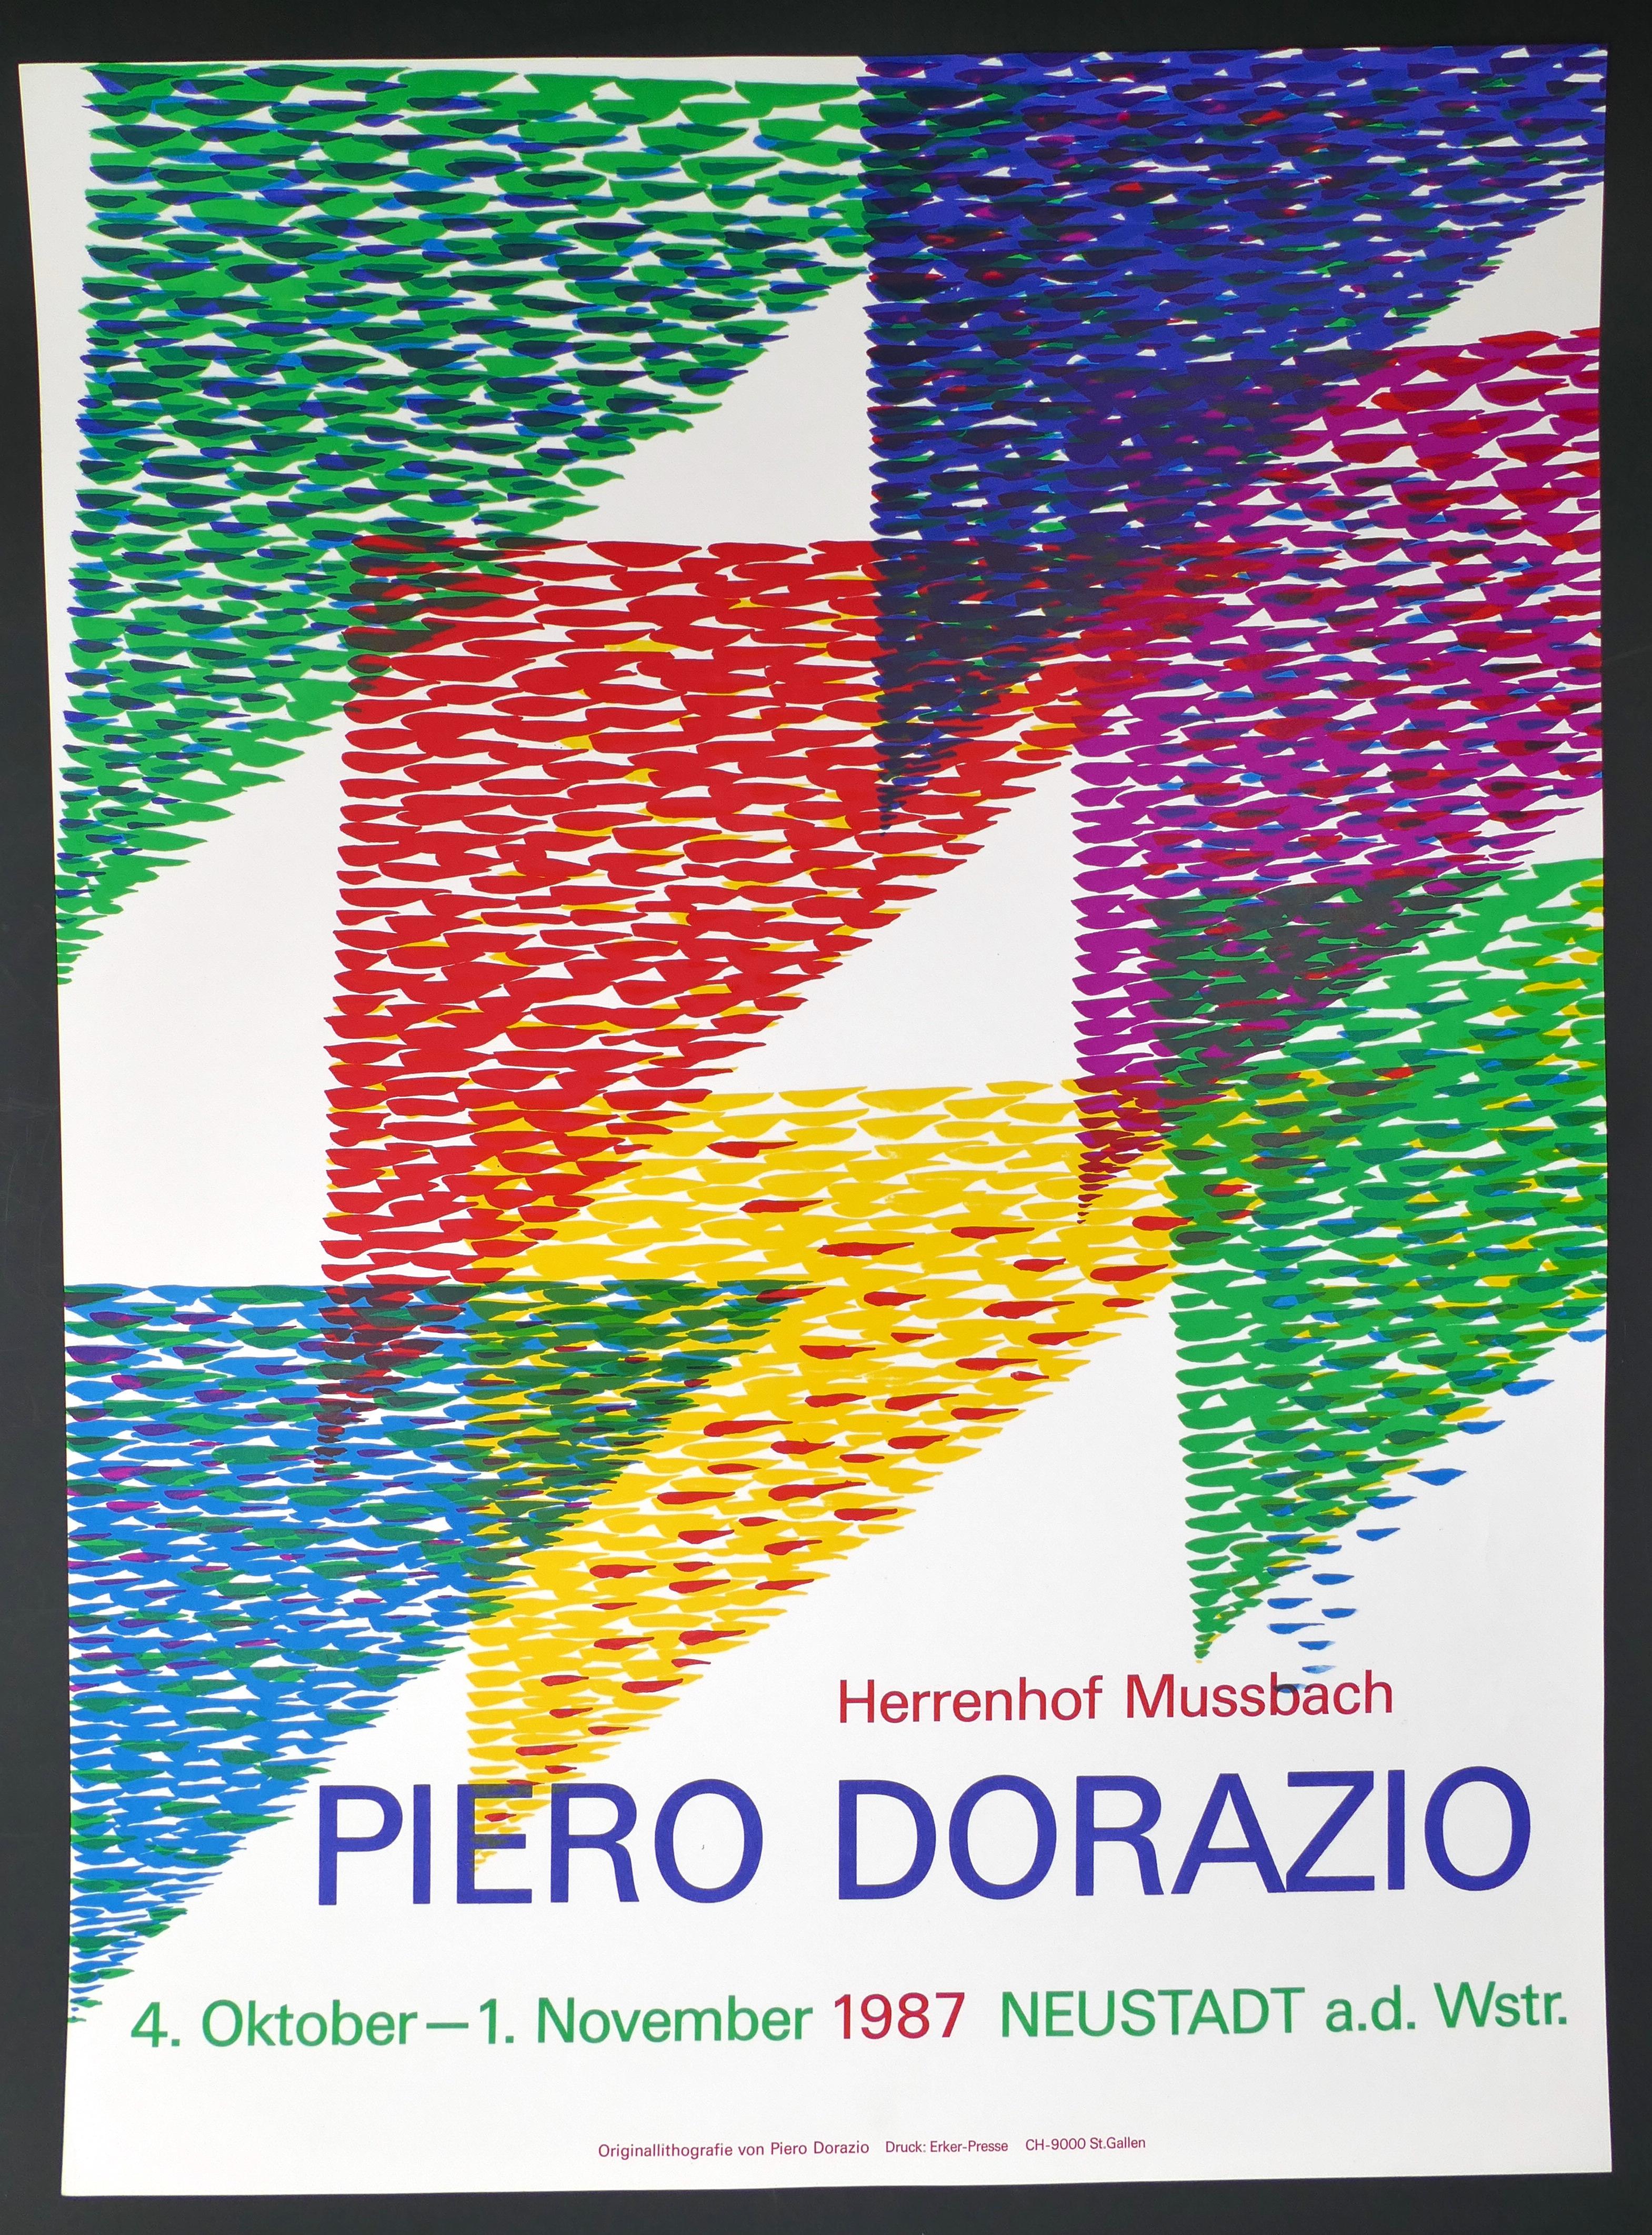 Piero Dorazio Abstract Print - Poster for P. Dorazio's Exhibition in Herrenhof Musbach, Germany